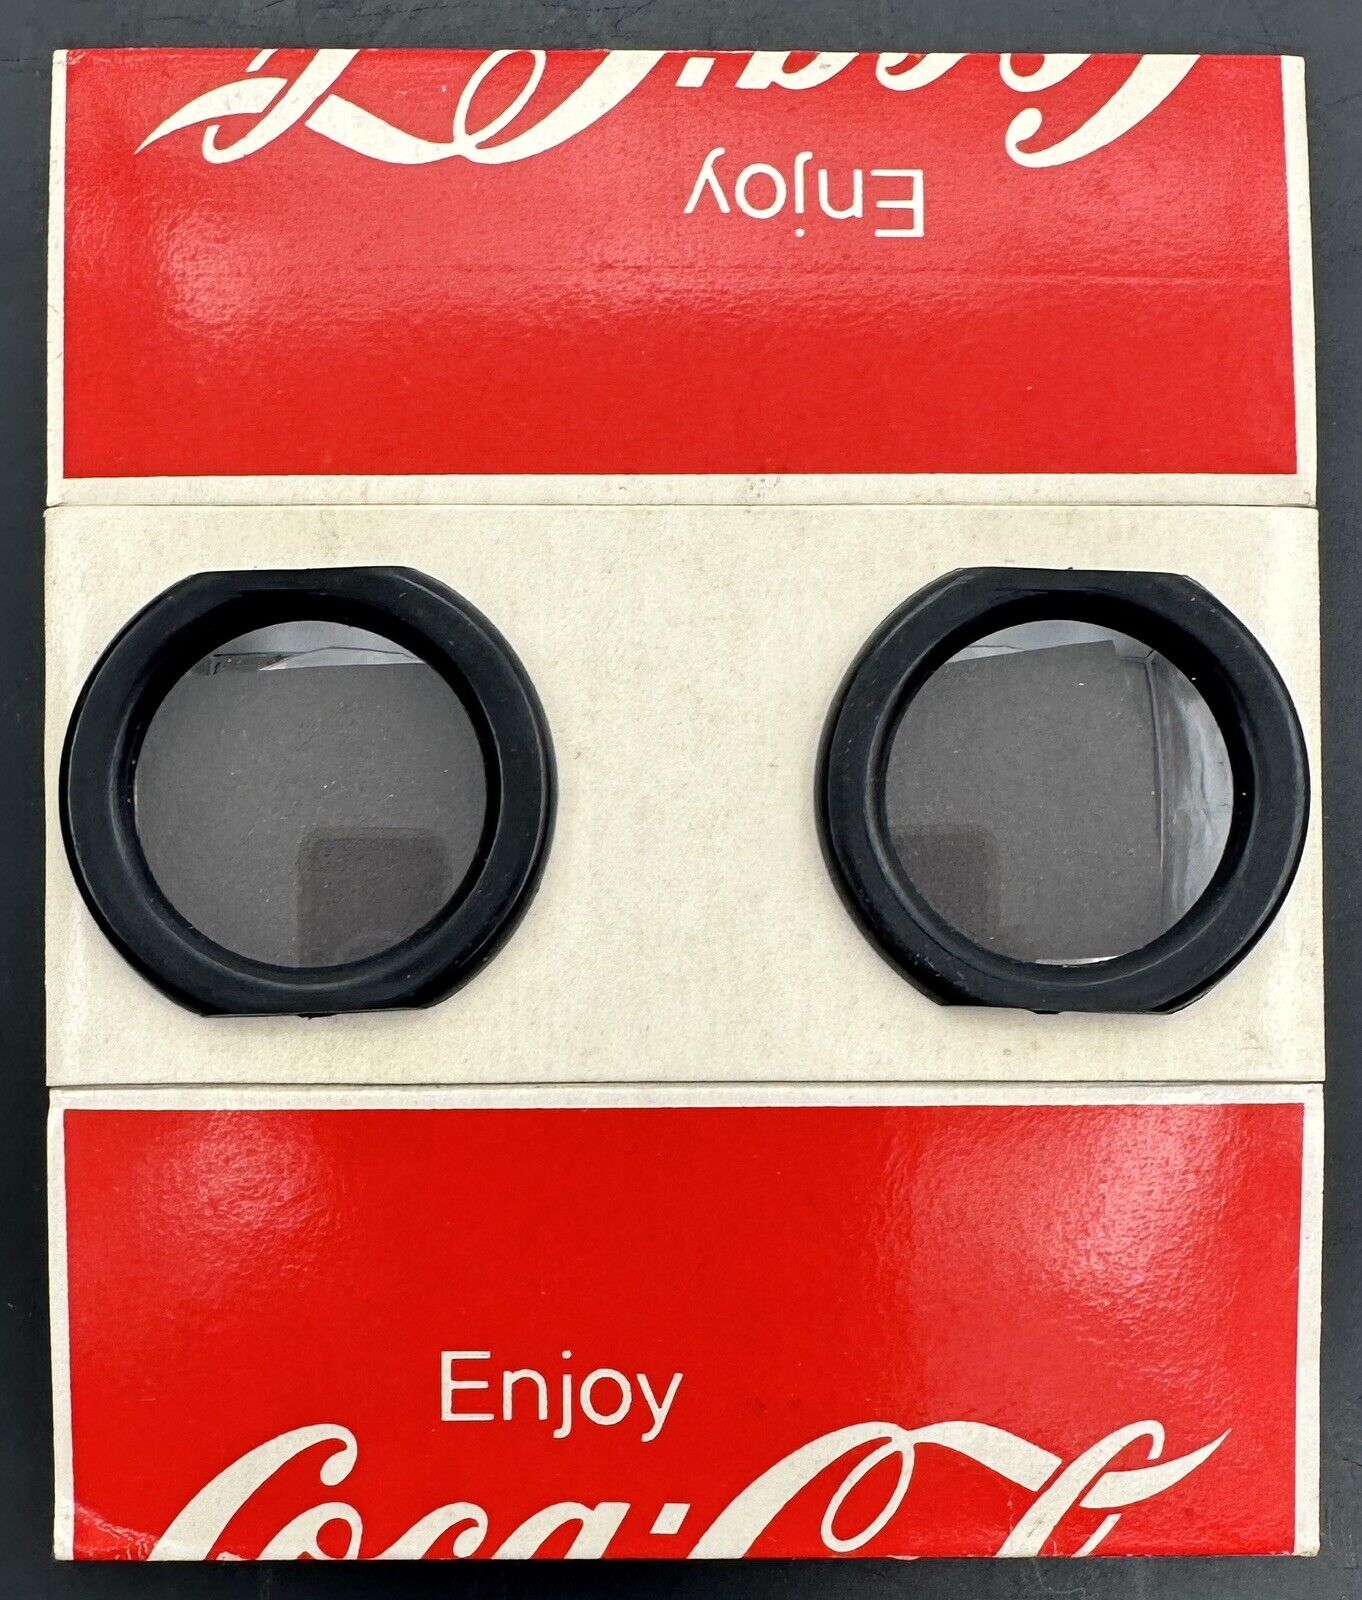 Coca Cola 1980 LA Olympics Souvenir Foldup Cardboard Binoculars Advertising